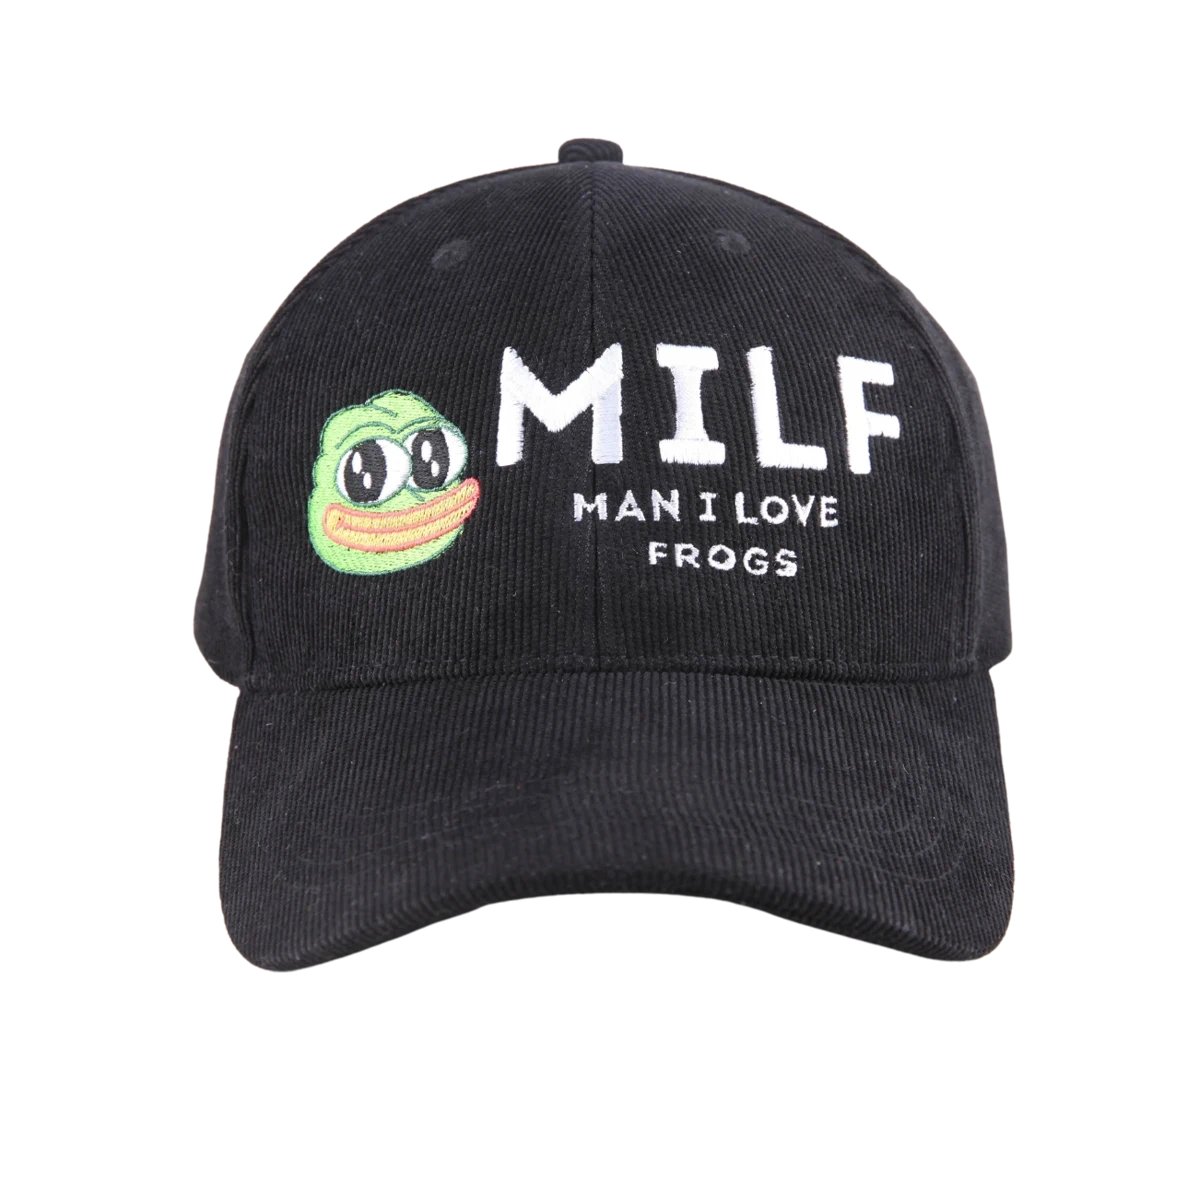 MILF Corduroy Hat - Man I Love Frogs - Black